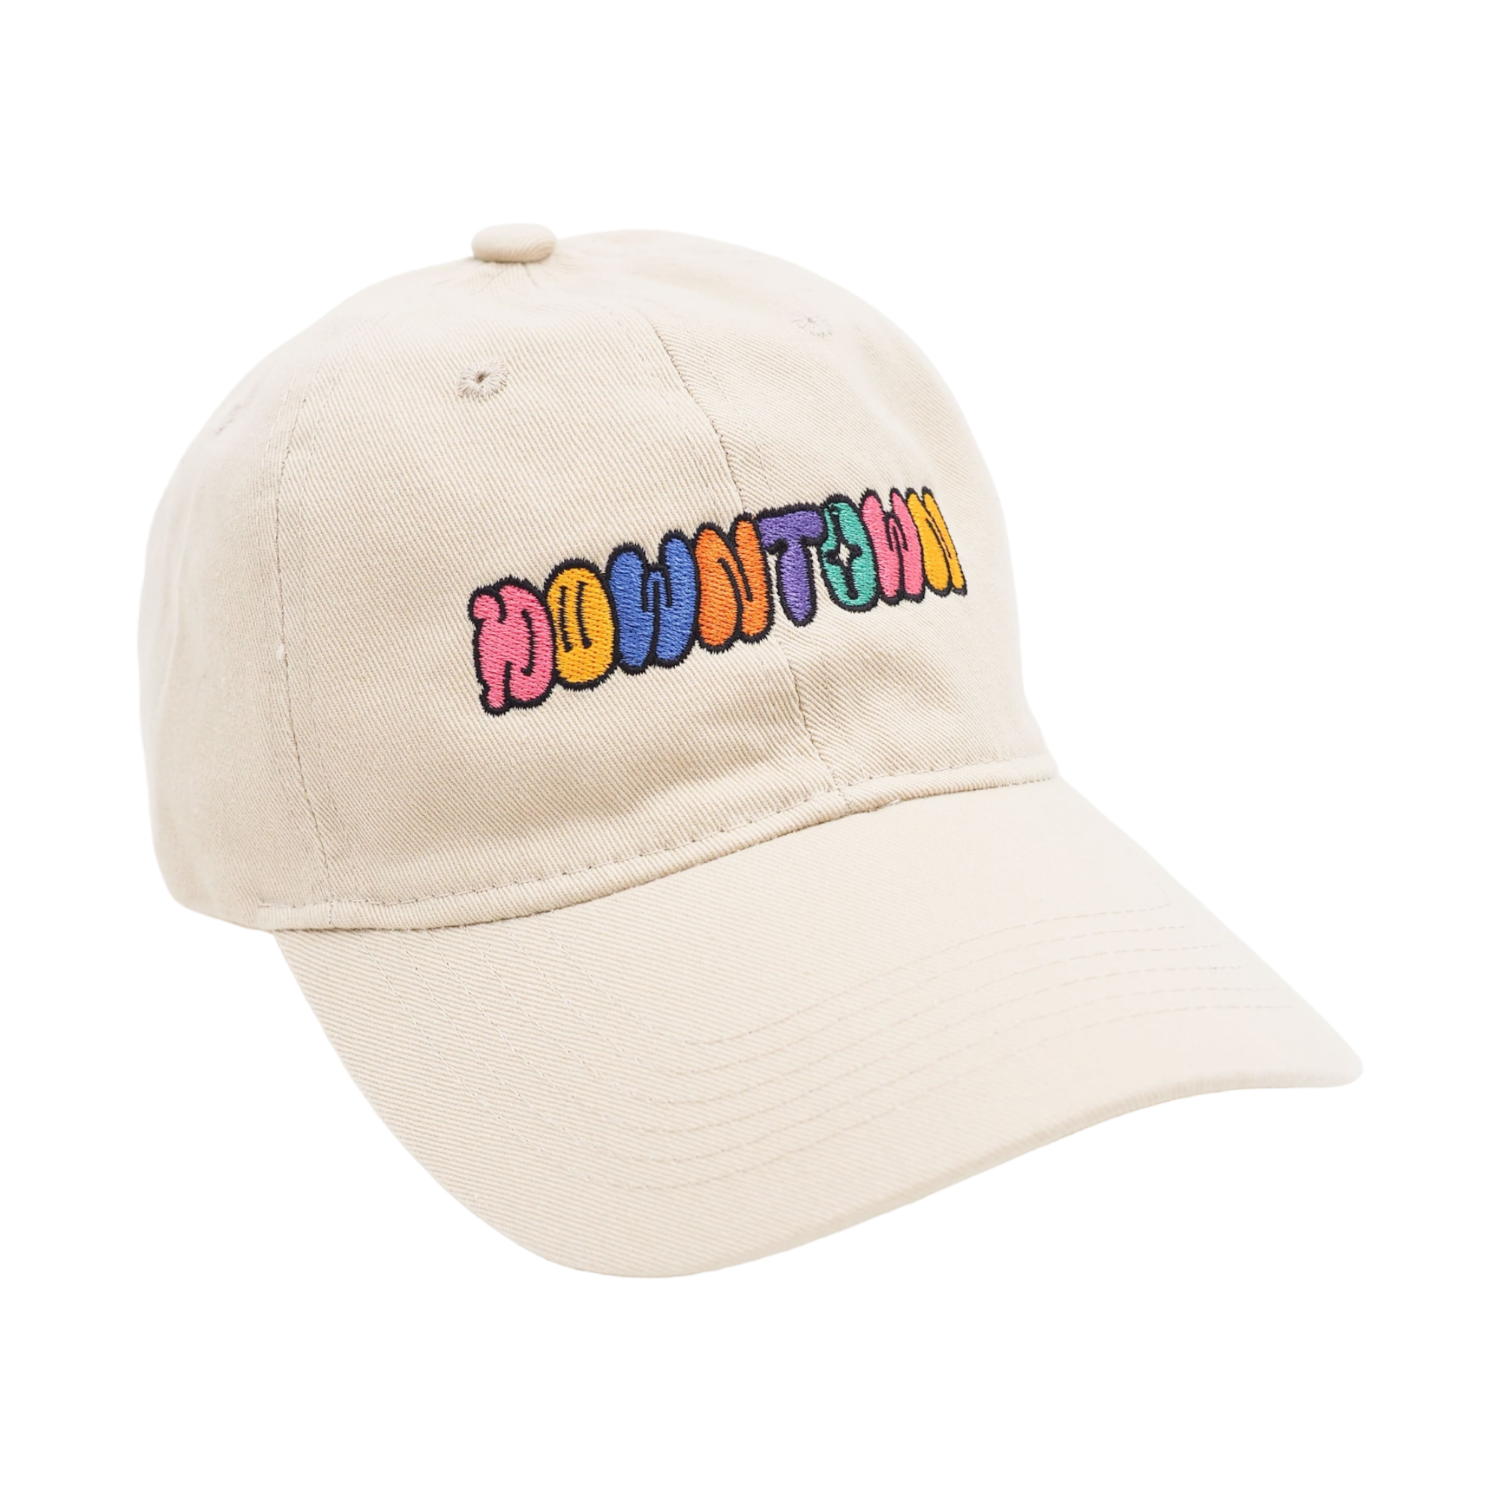 DOWNTOWN DOODLE CAP (BEIGE)